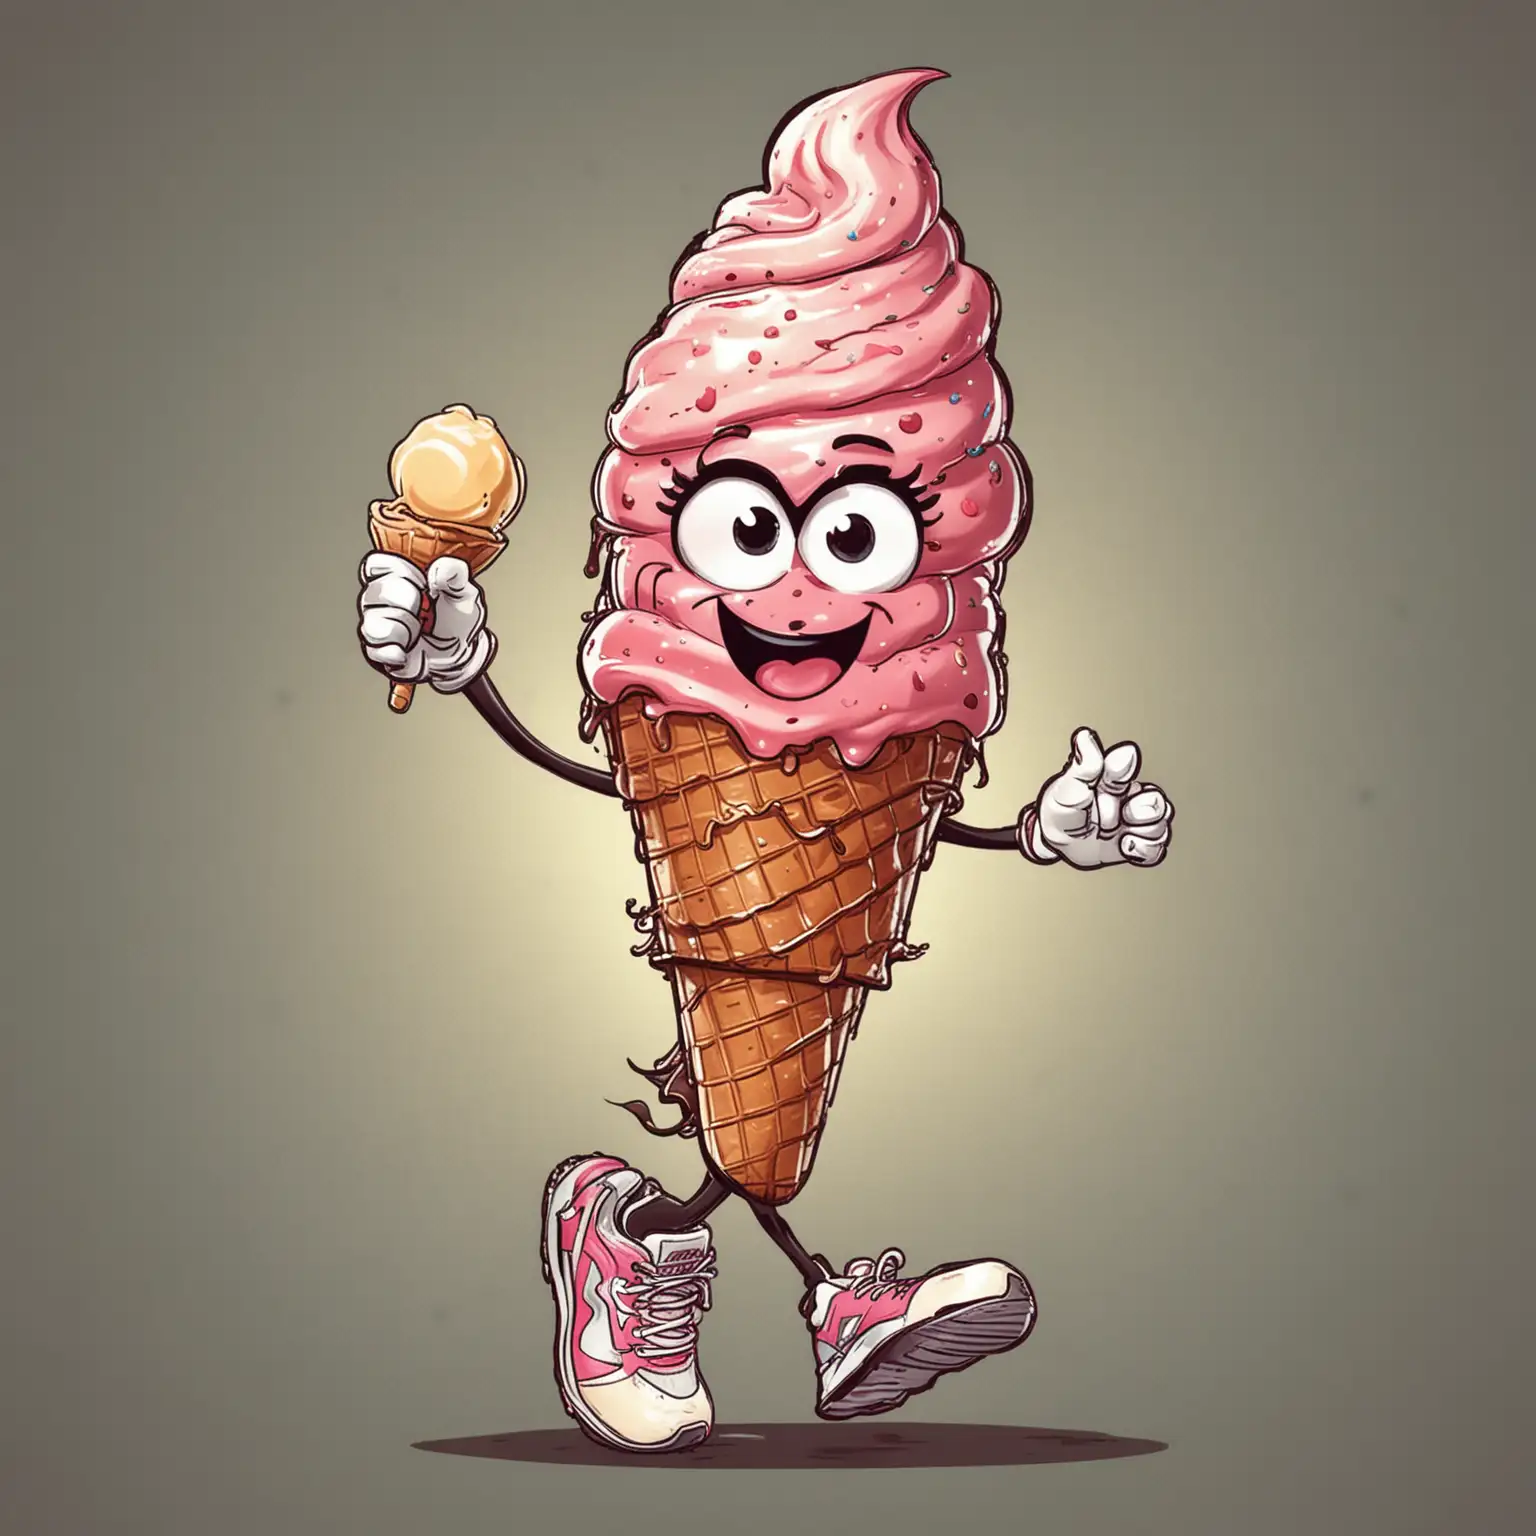 Retro Style Ice Cream Cone Cartoon Mascot Racing in 5k Event with Halftone Design